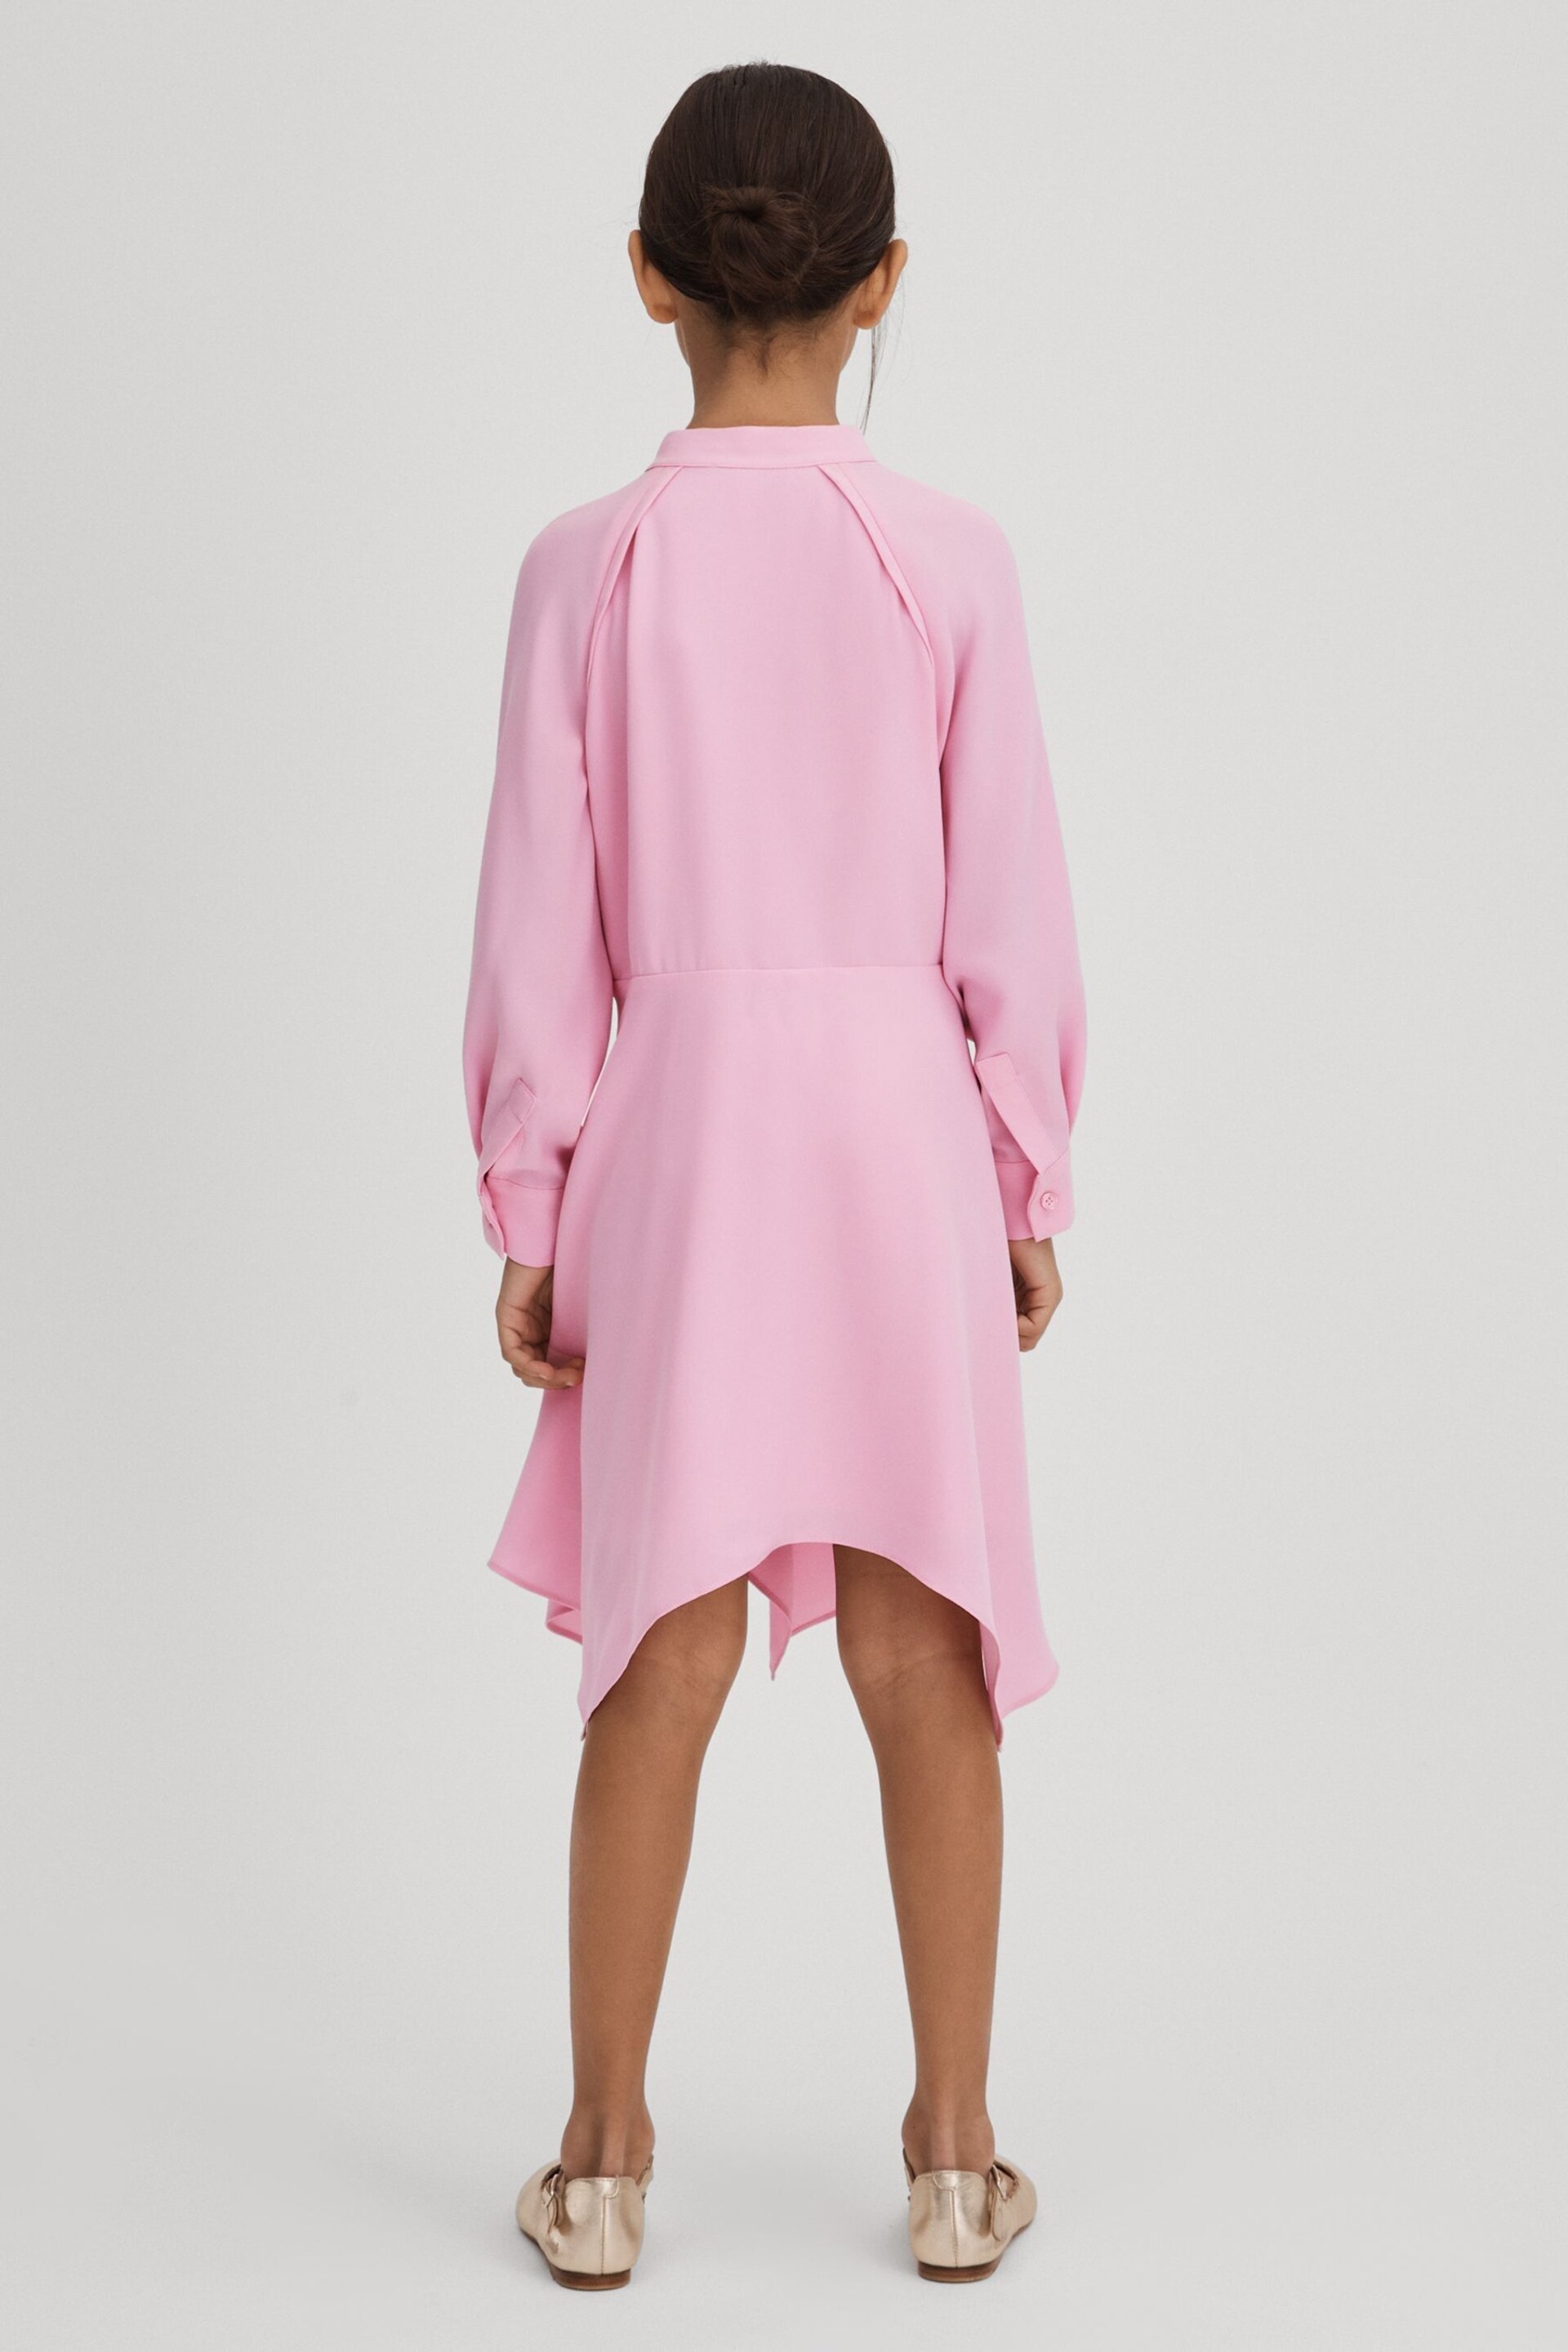 Reiss Pink Erica Senior Zip Front Asymmetric Dress - Image 4 of 6